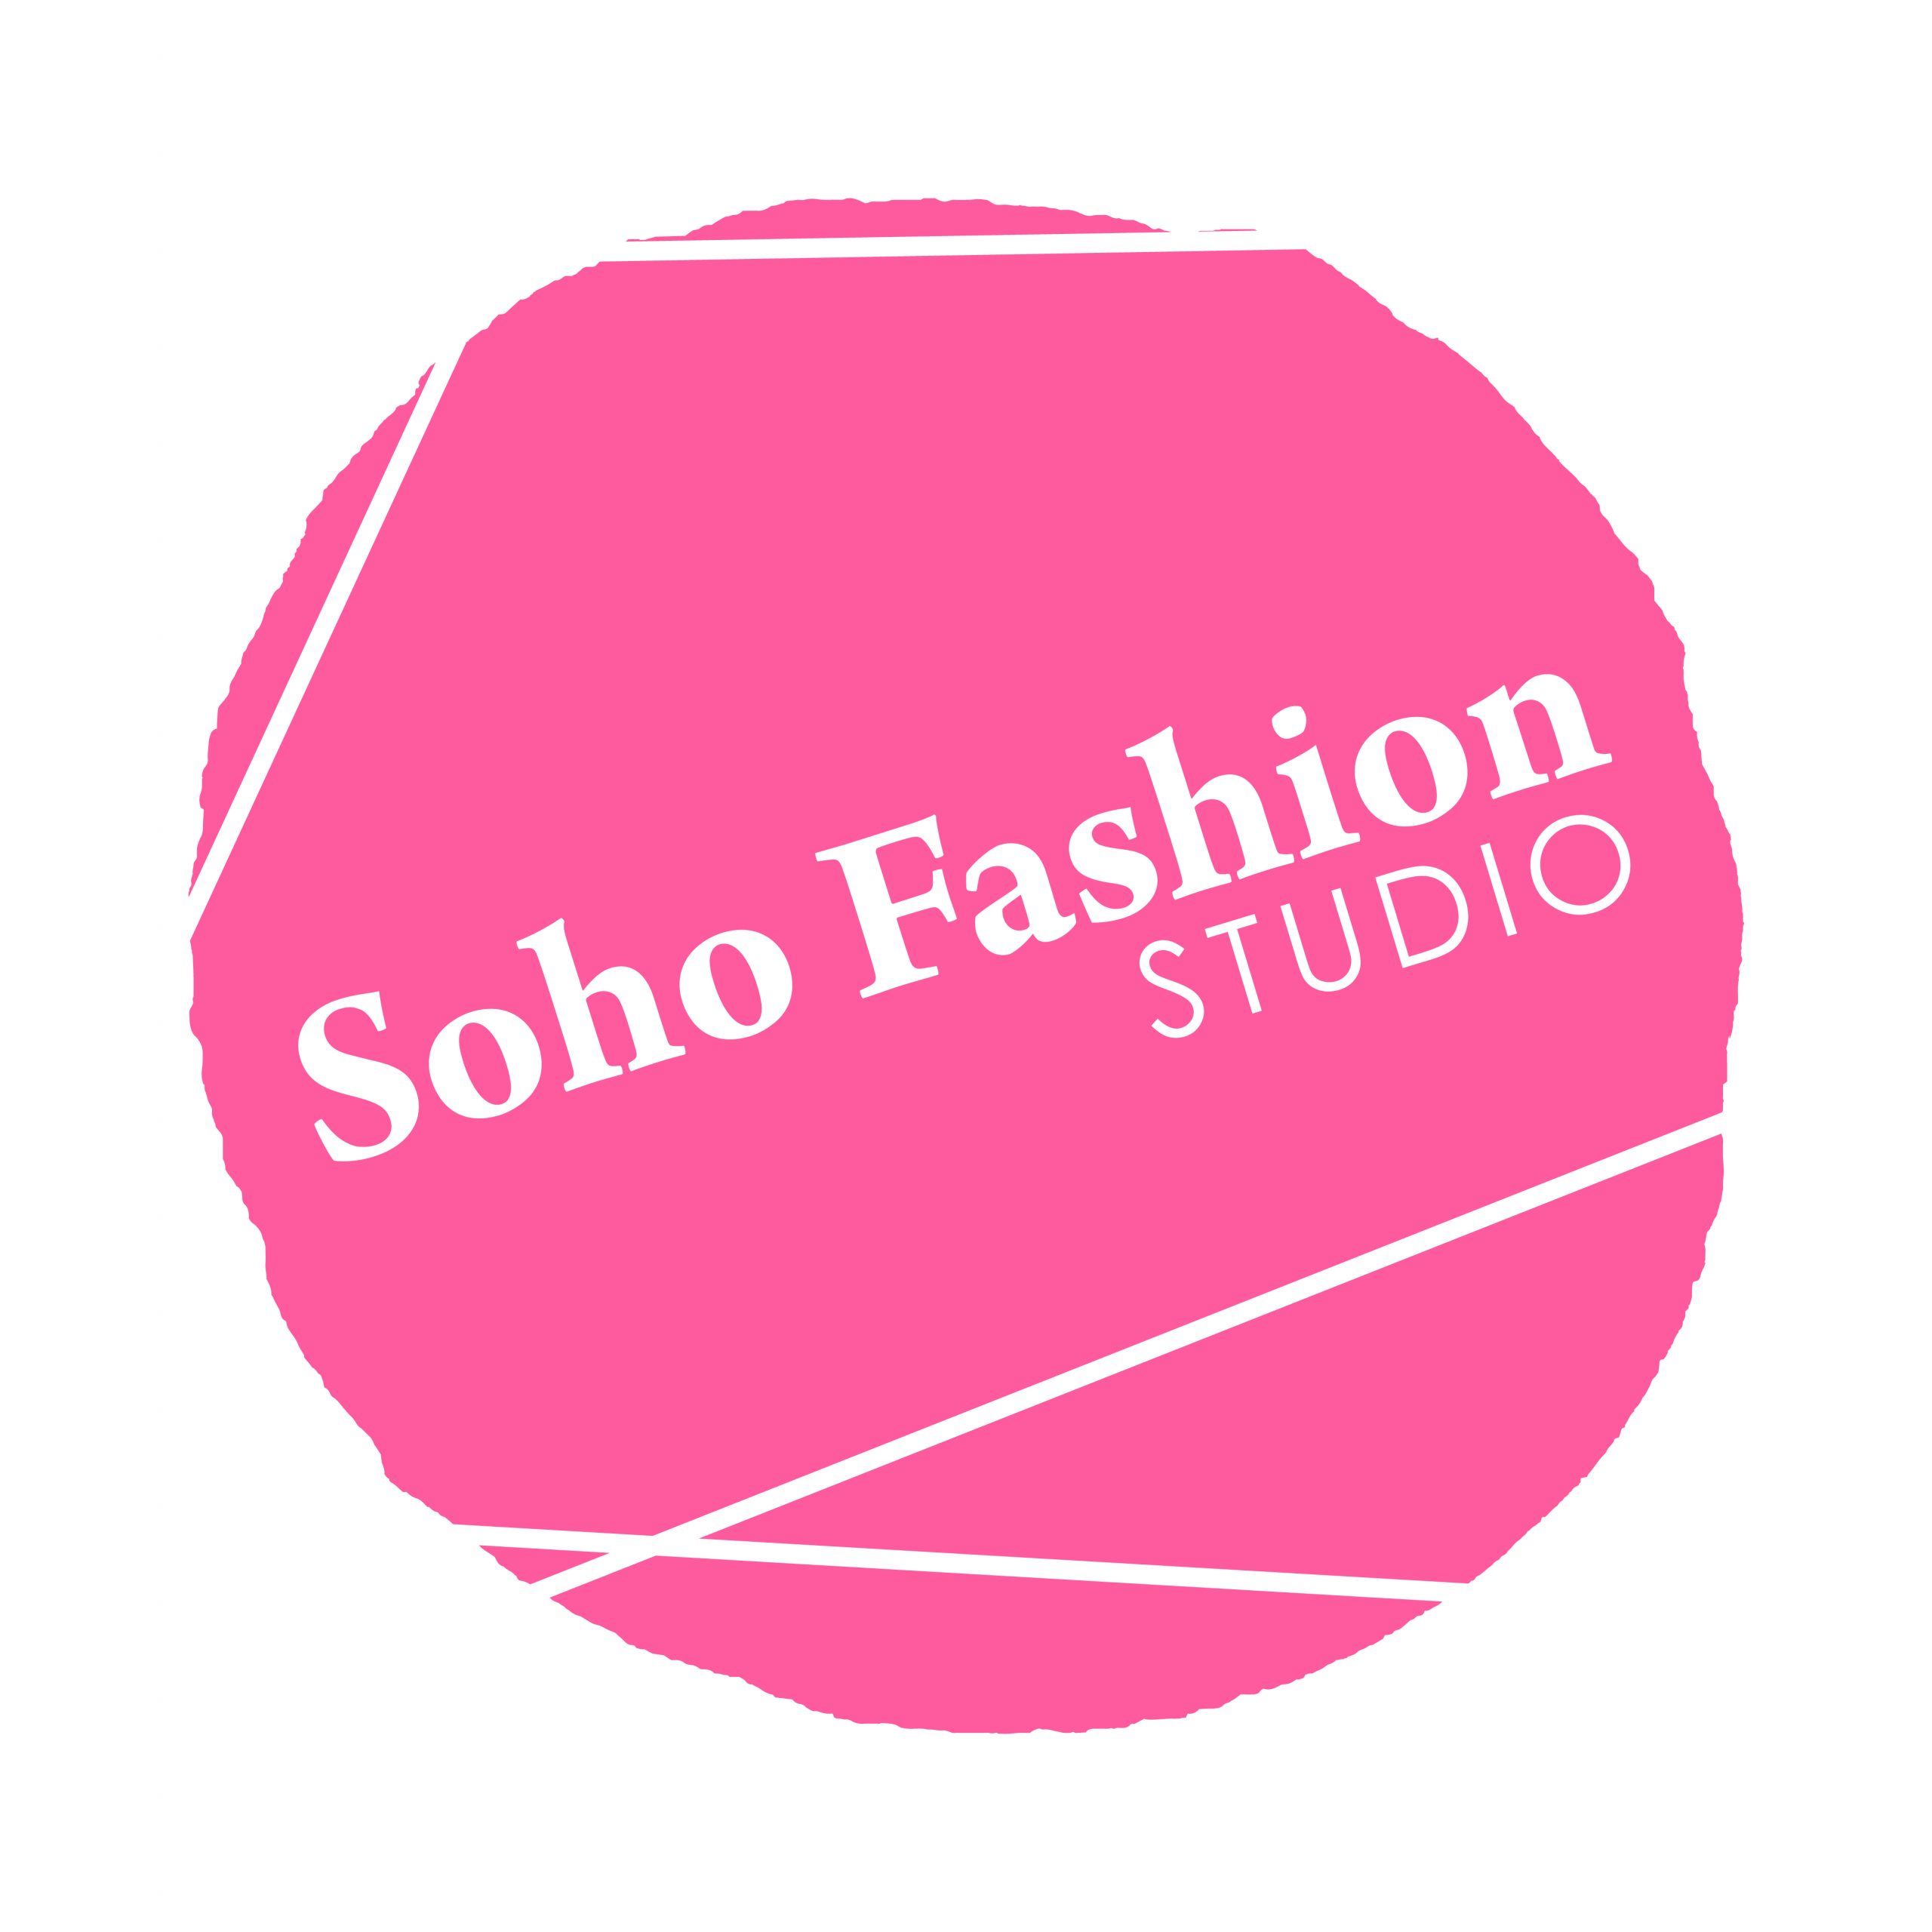 Soho Fashion Studios 